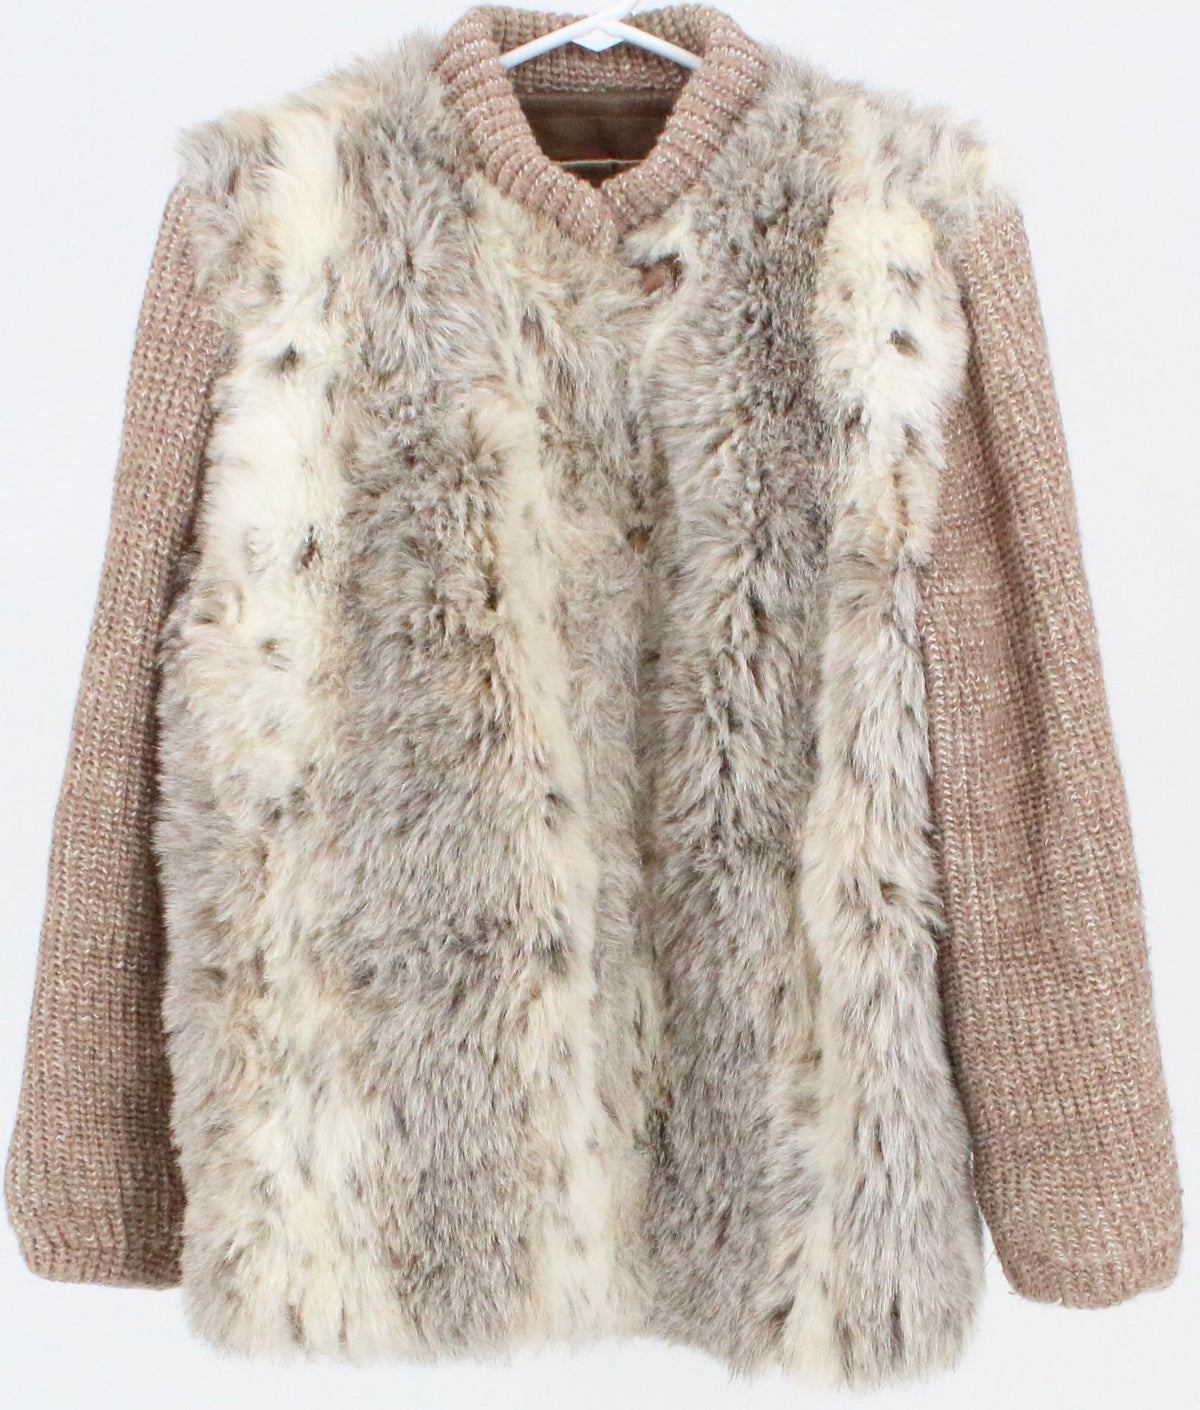 Style VI Ltd. Beige Faux Fur Jacket With Knit Sleeves